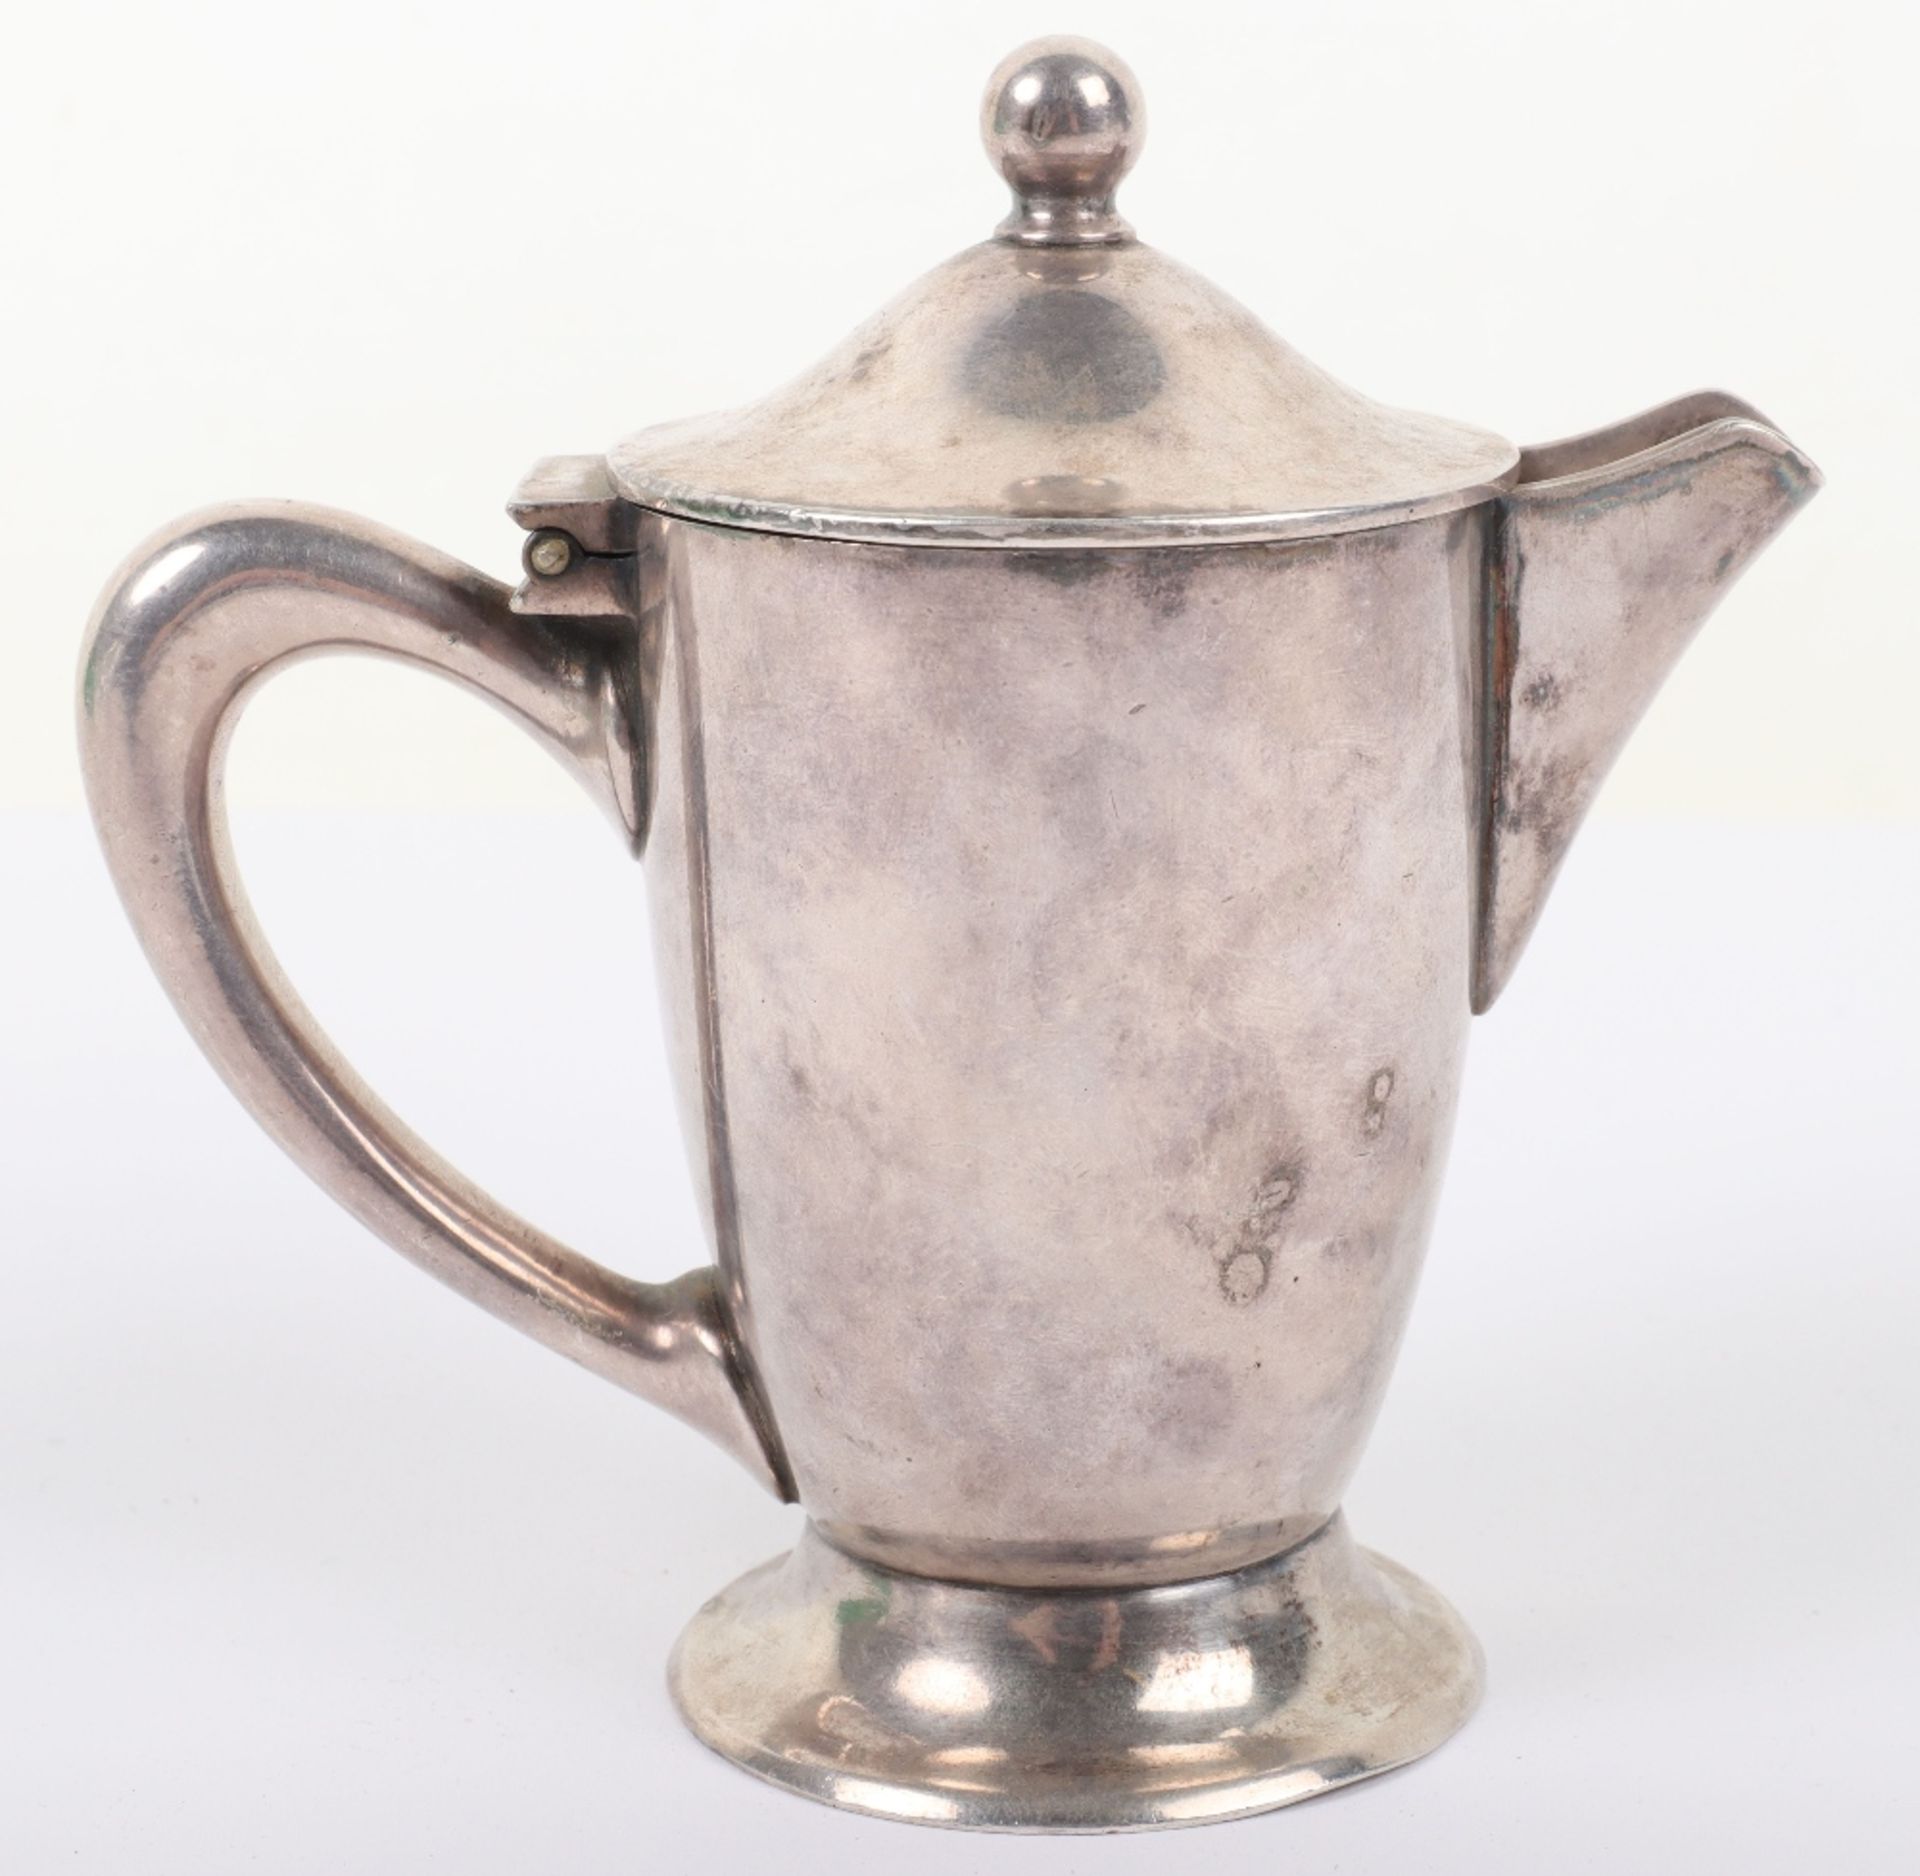 Third Reich Der Deutsche Hof Hotel Formal Tableware Silver Plated Single Cup Coffee Pot - Image 4 of 8